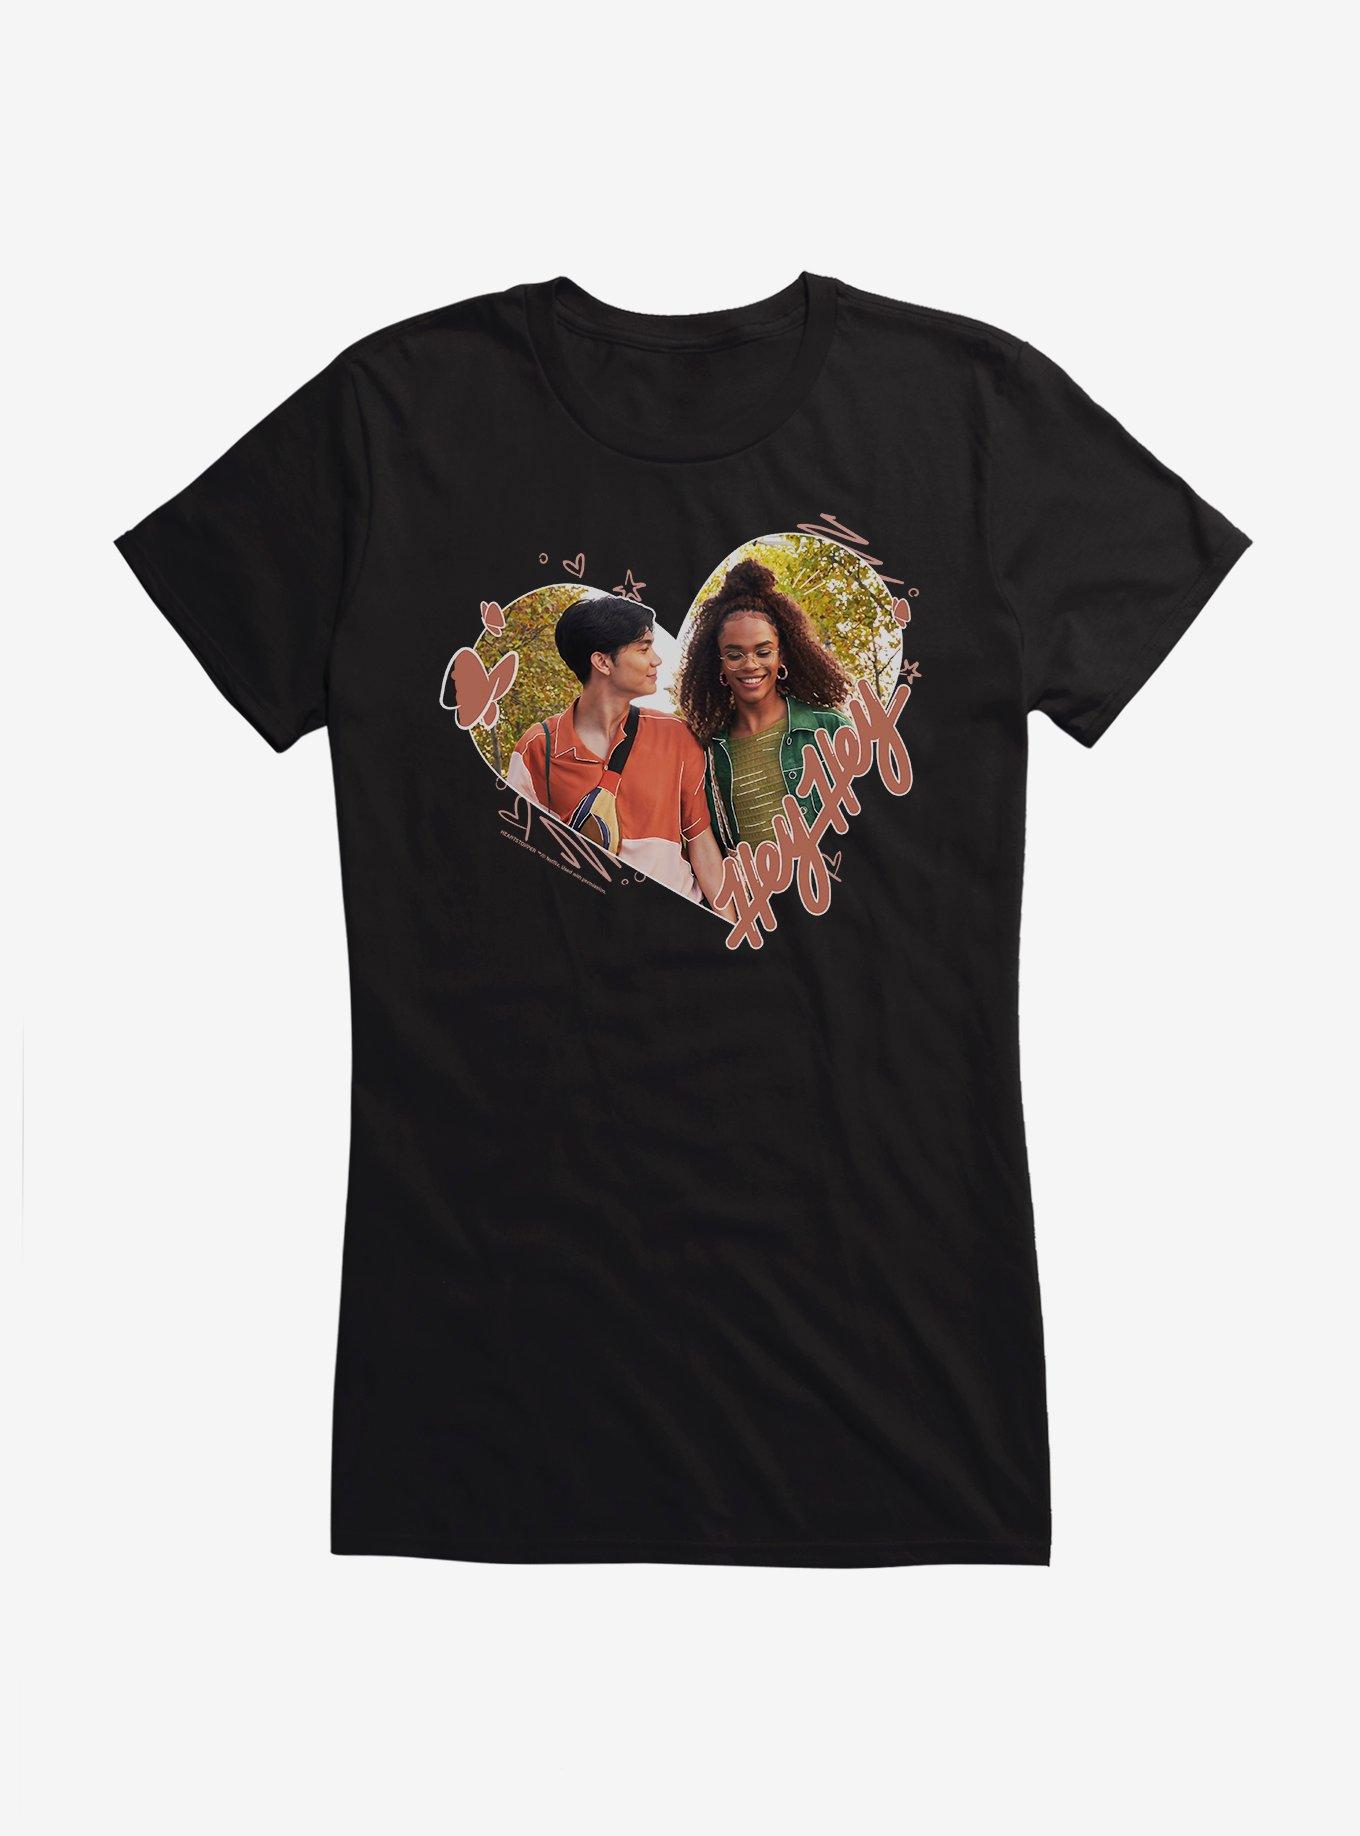 Heartstopper Hey Elle And Tao Girls T-Shirt